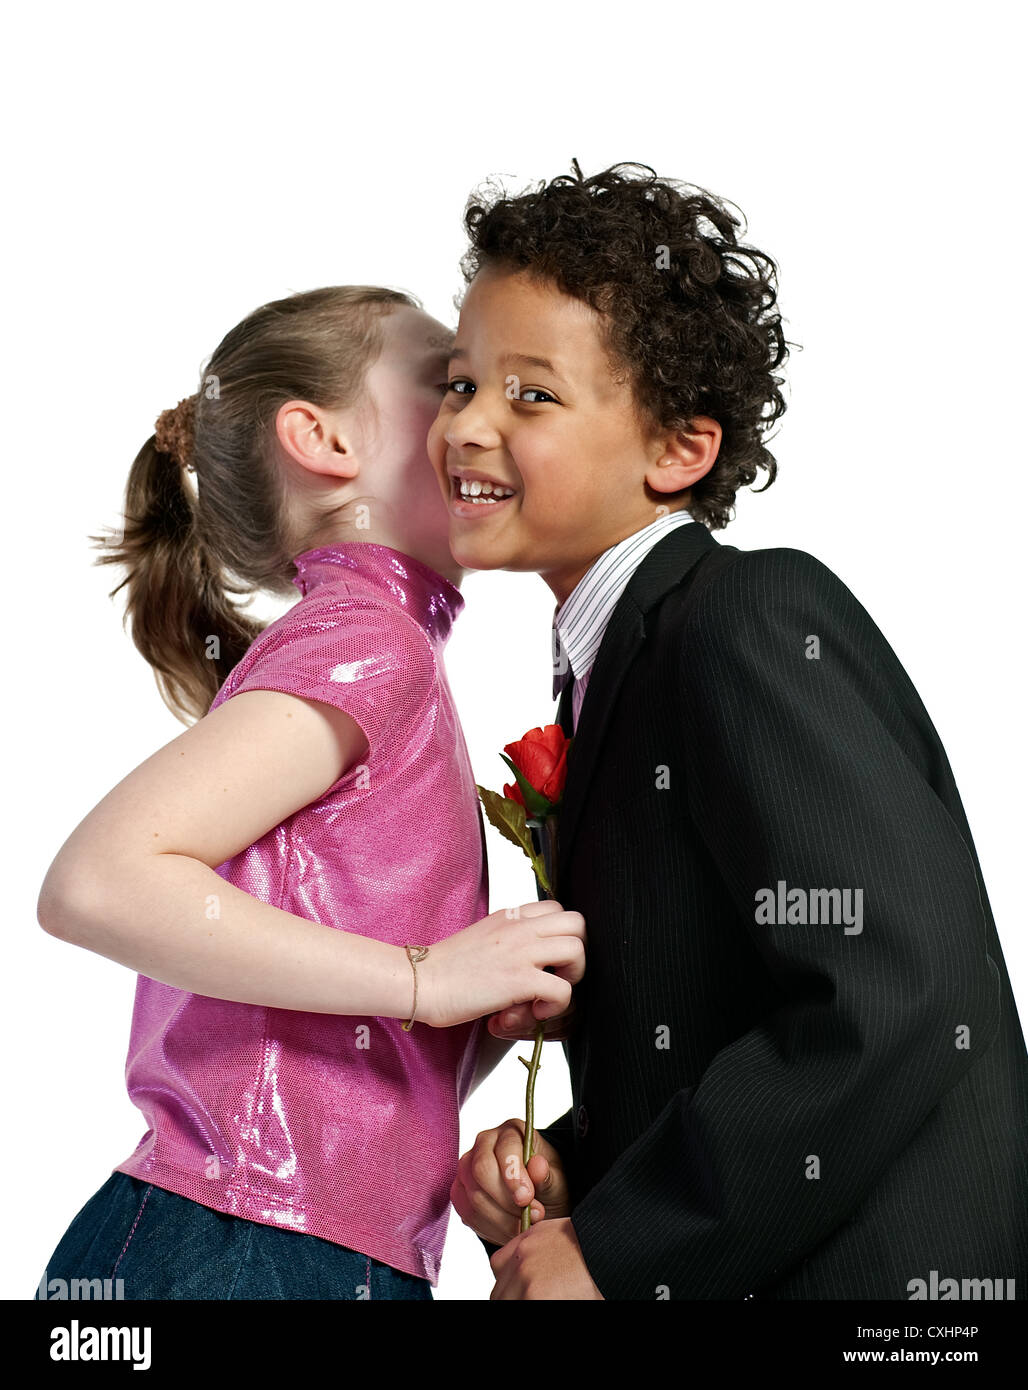 Cute little girl kissing a boy Stock Photo - Alamy